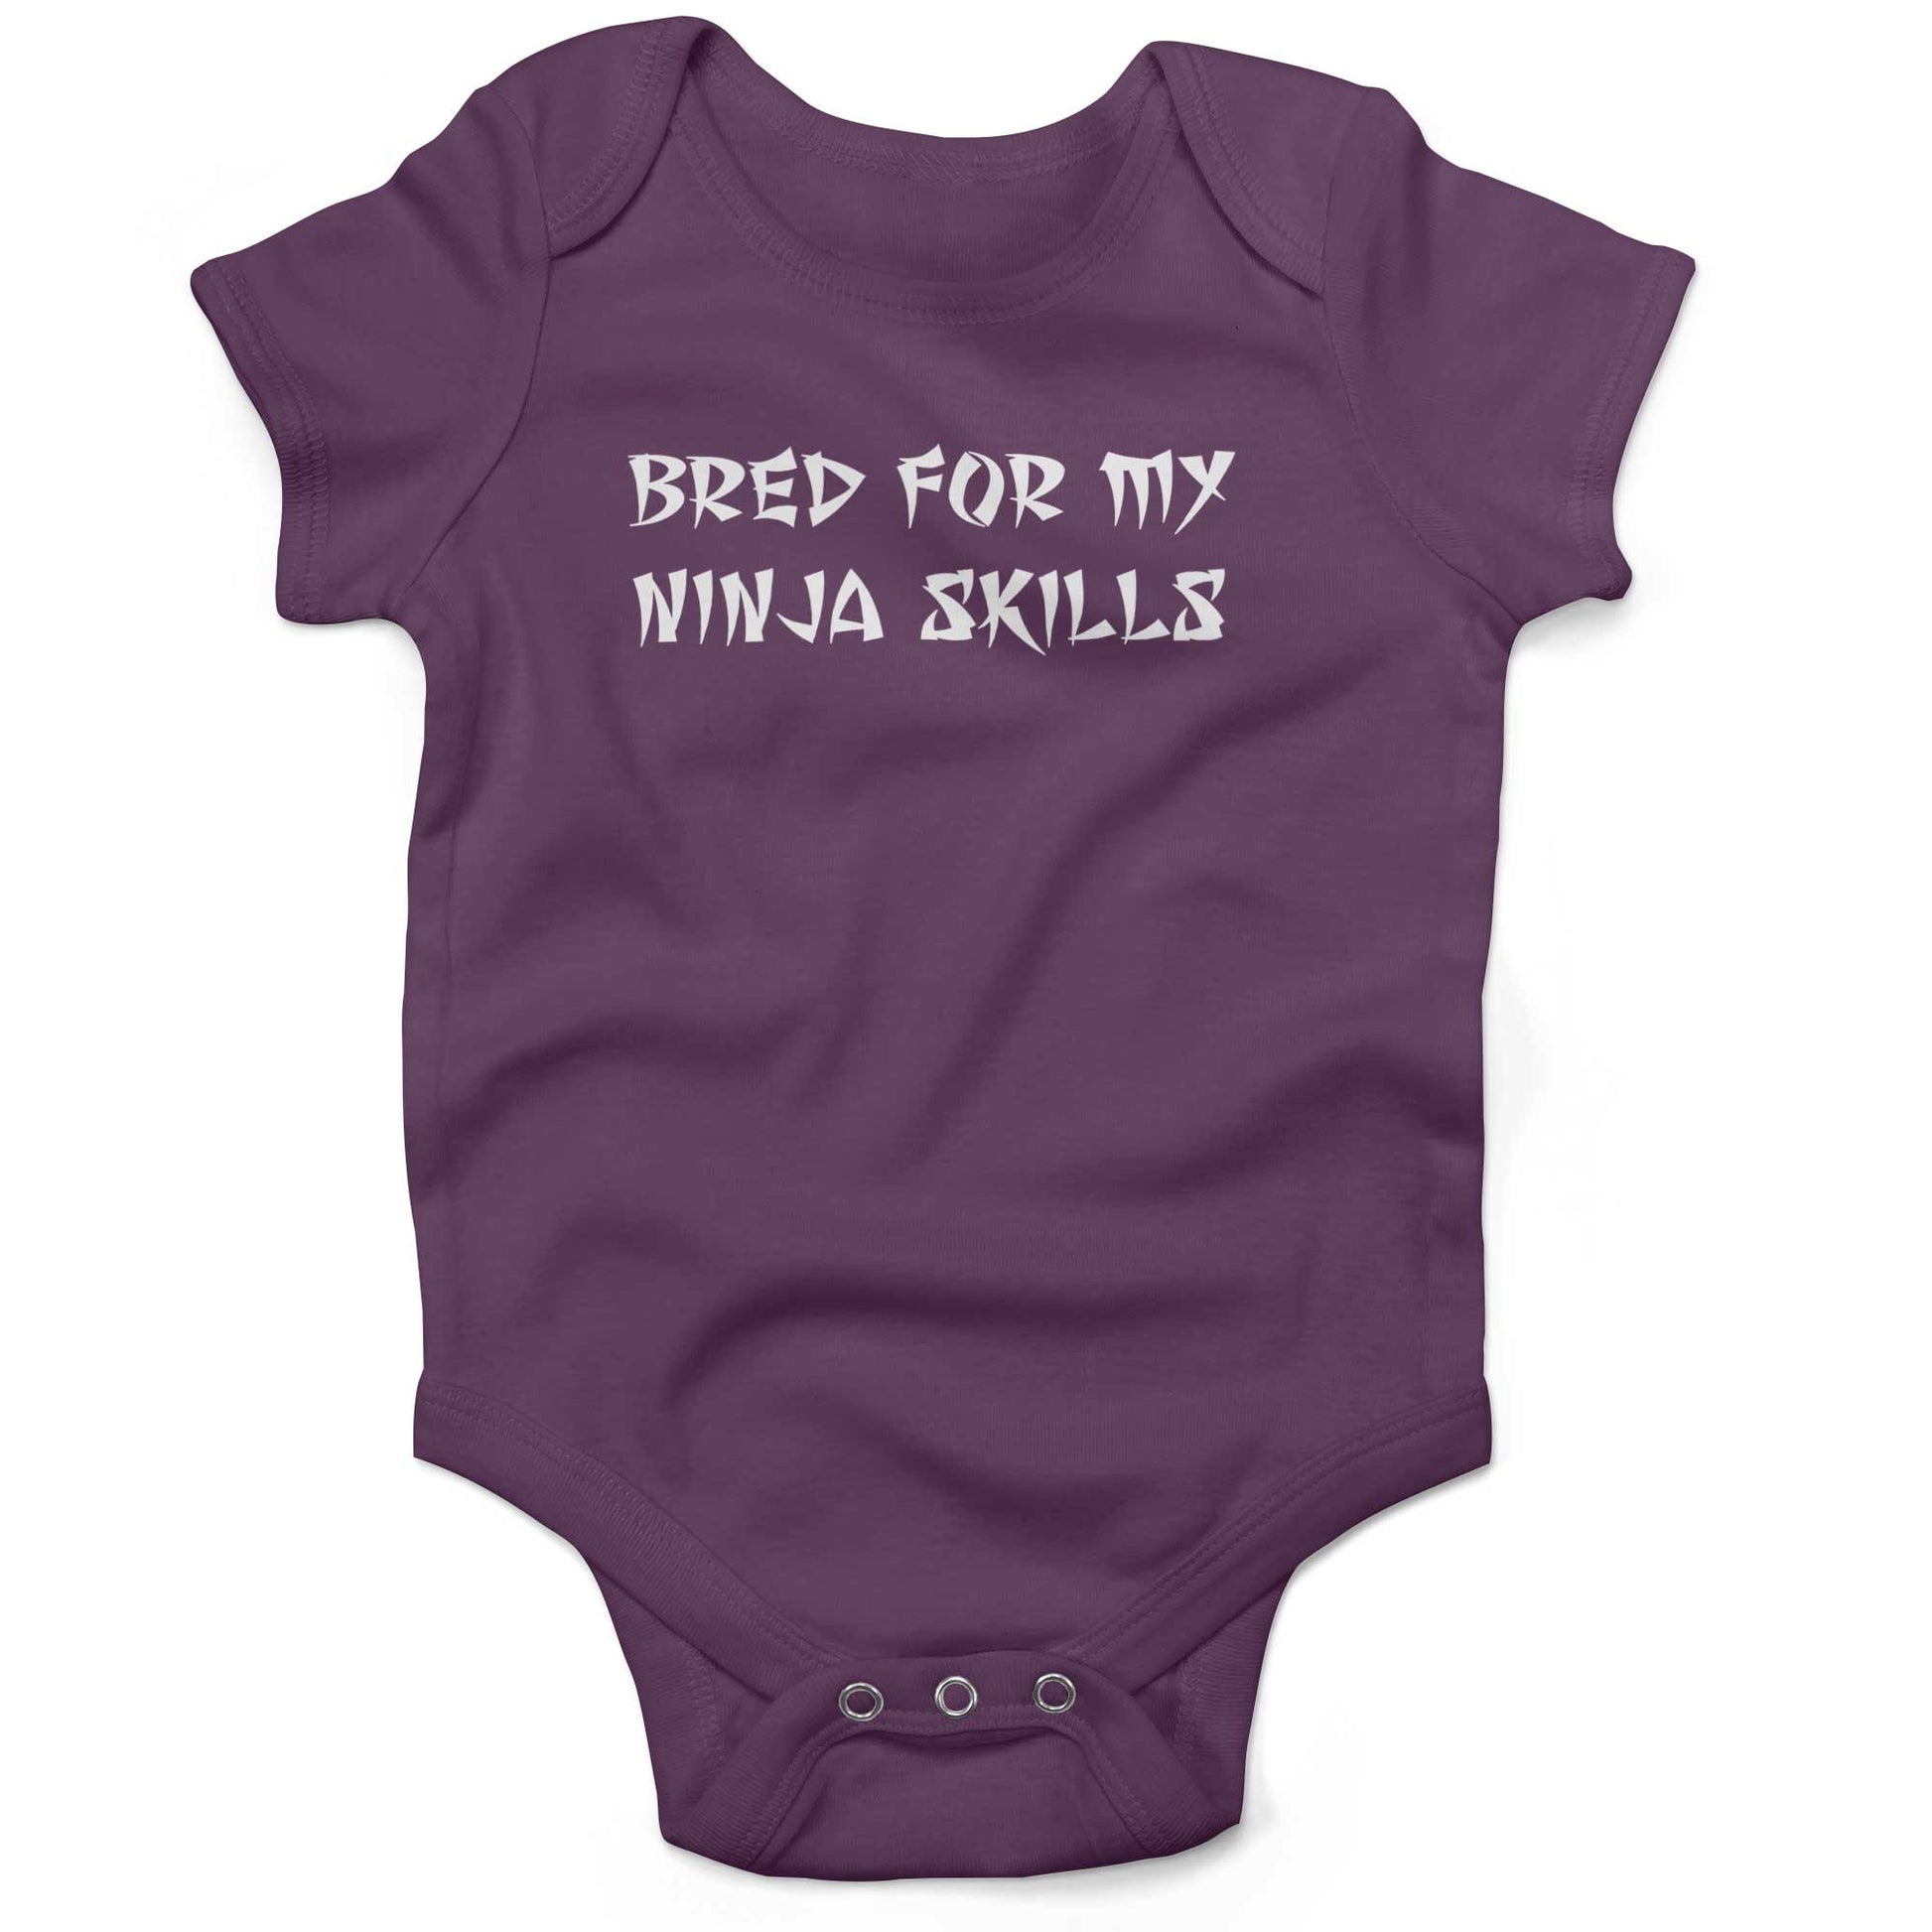 Bred For My Ninja Skills Infant Bodysuit or Raglan Baby Tee-Organic Purple-3-6 months